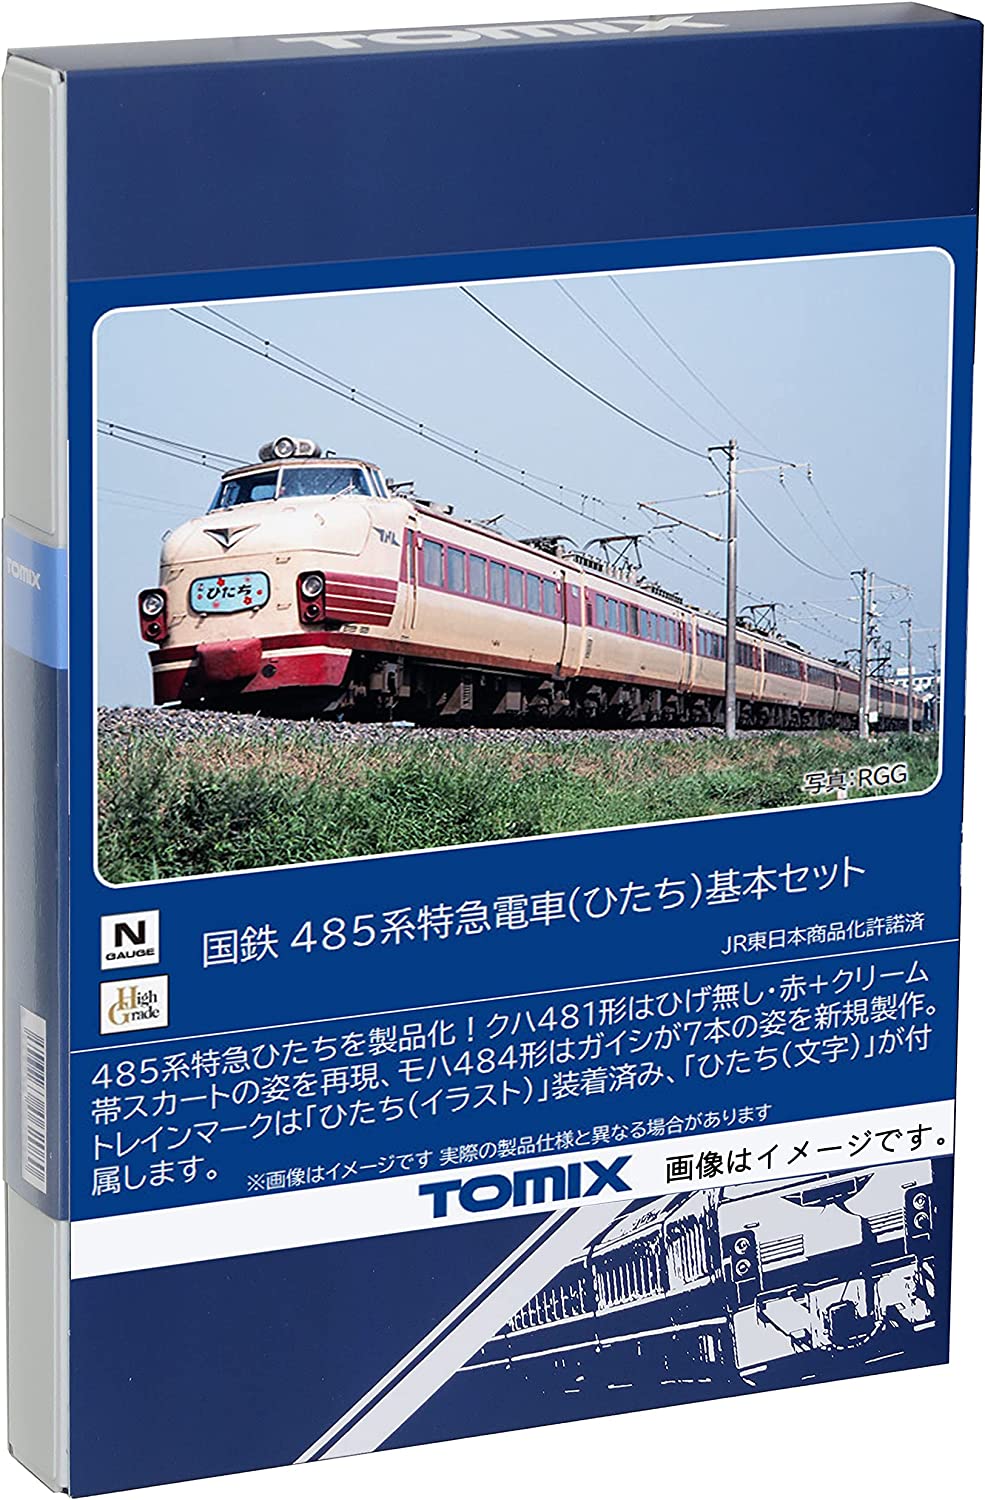 [PO AUG 2023] 98825 J.N.R. Limited Express Series 485 (Hitachi)